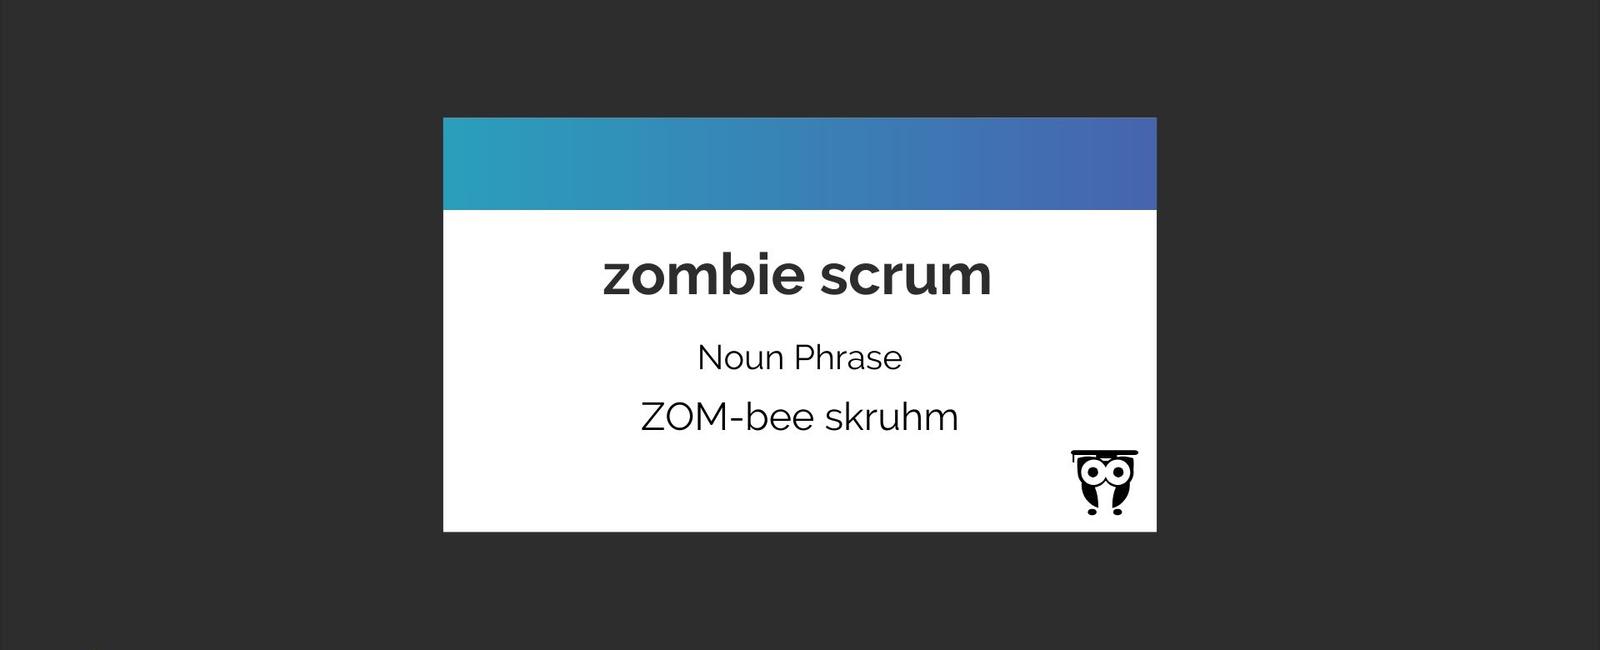 Zombie Scrum